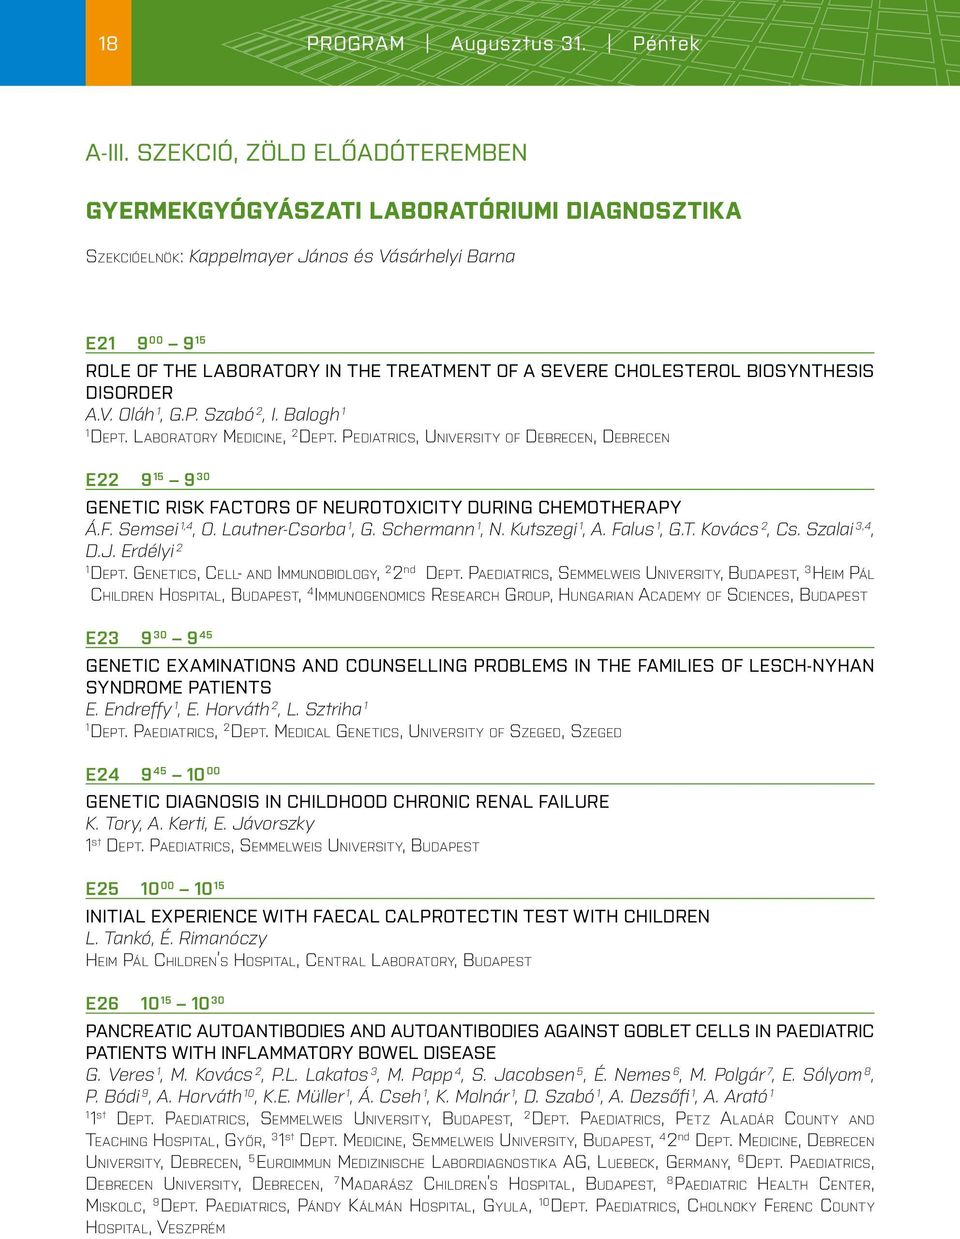 CHOLESTEROL BIOSYNTHESIS DISORDER A.V. Oláh, G.P. Szabó 2, I. Balogh Dept. Laboratory Medicine, 2 Dept.